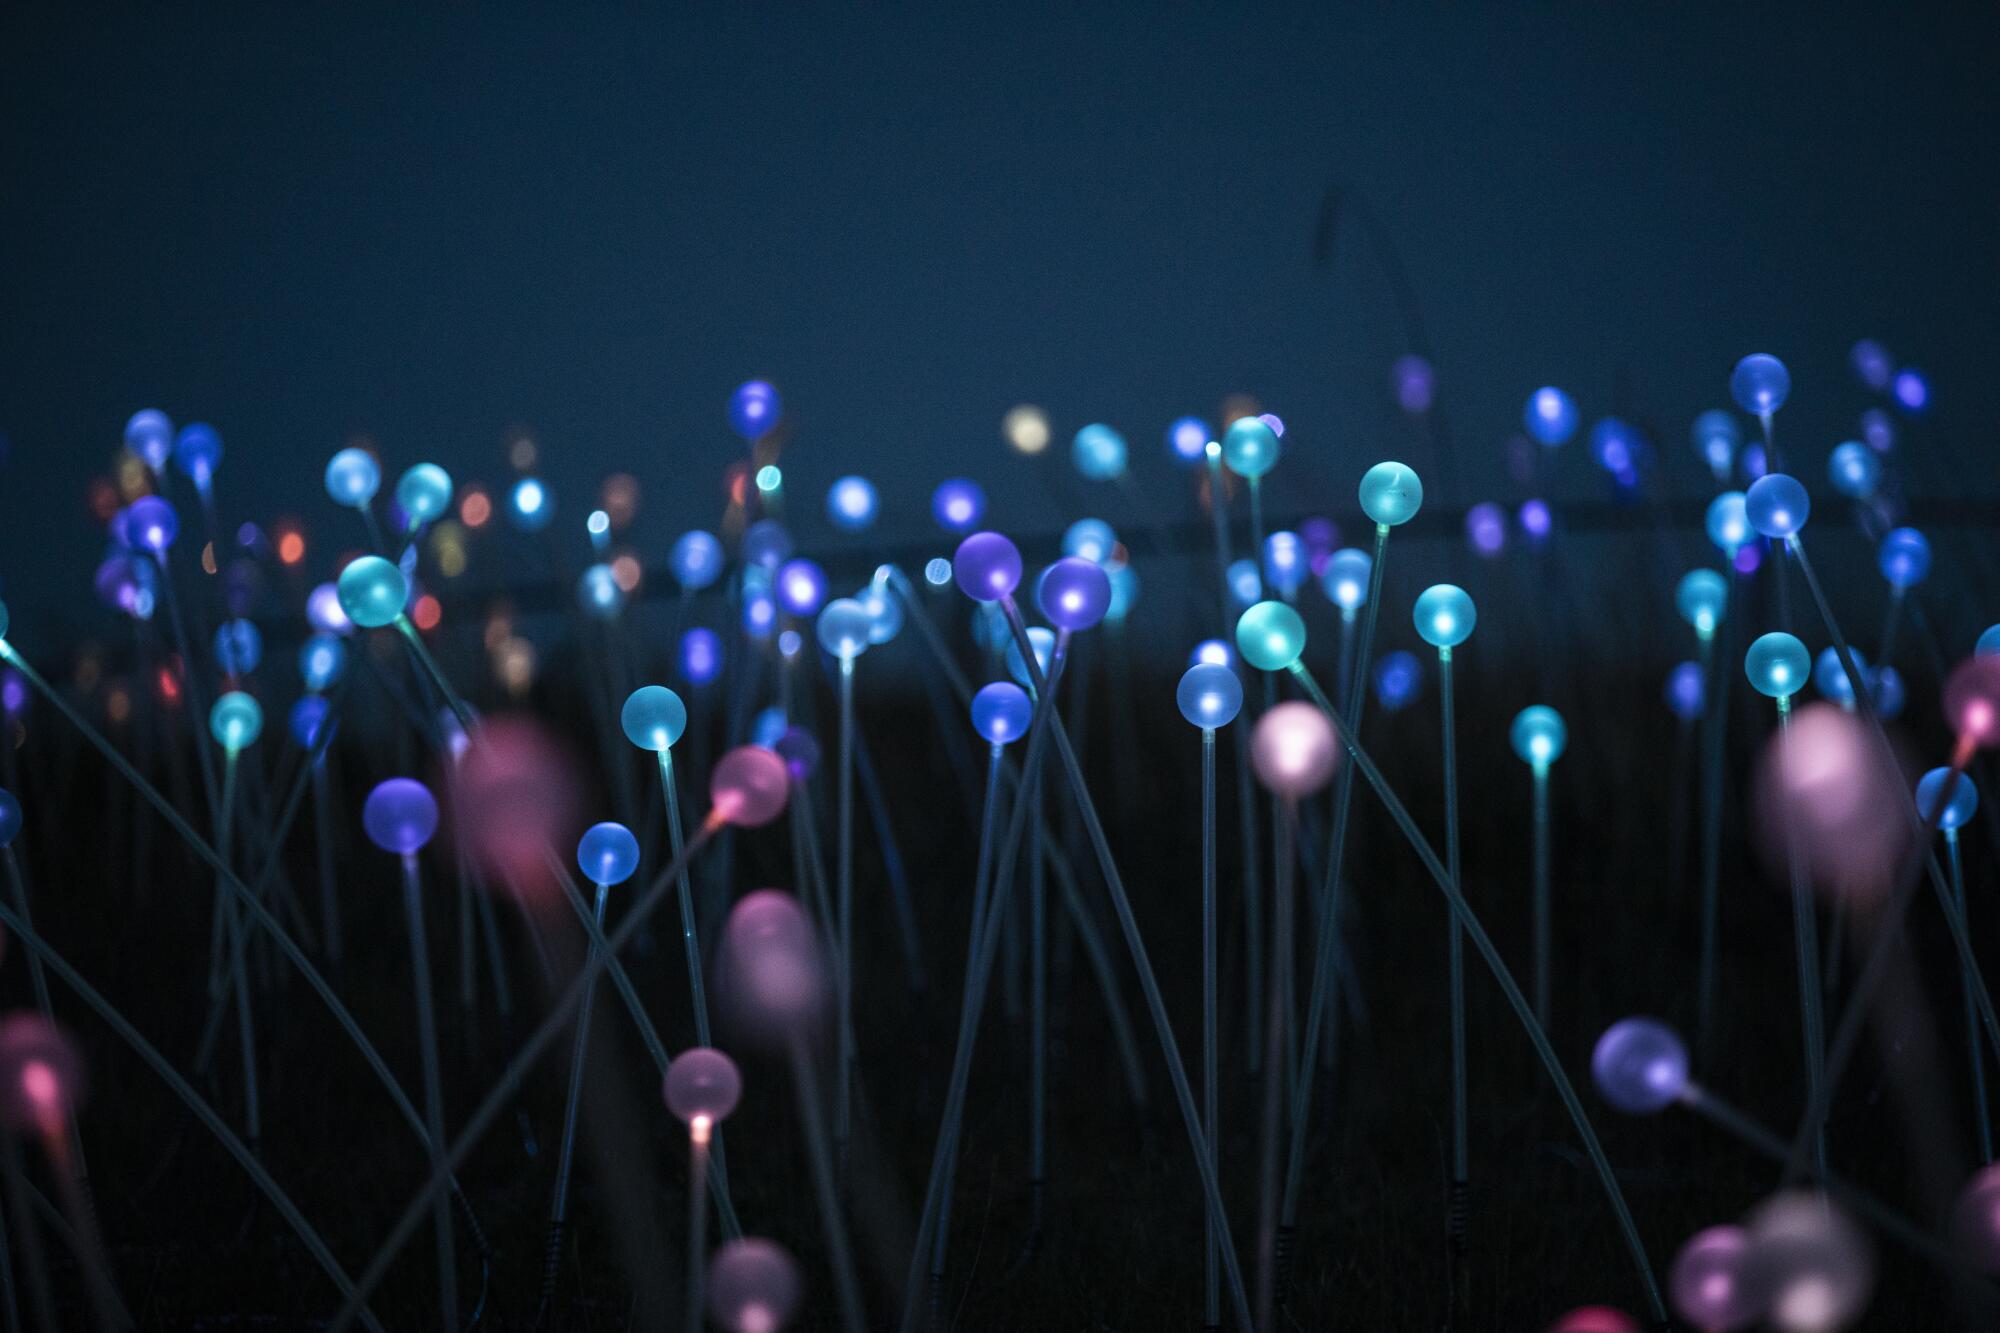 Sensorio is composed of 58,800 stemmed spheres lit by fiber optics.